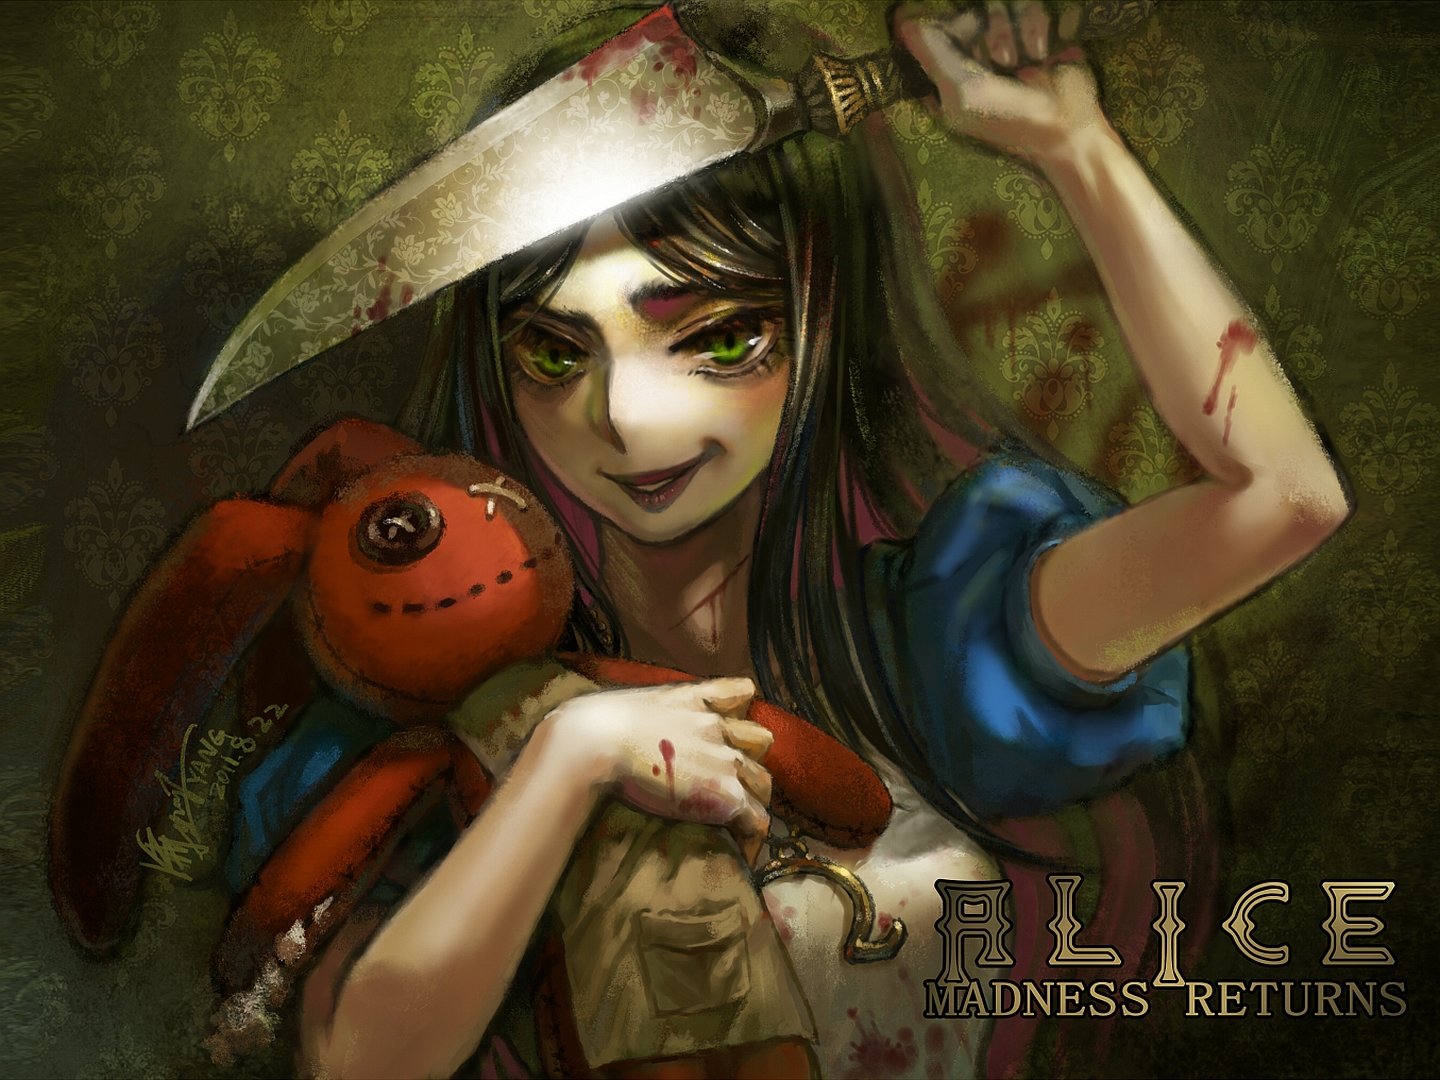 Best Alice: Madness Returns wallpaper ID:27554 for High Resolution hd 1440x1080 desktop